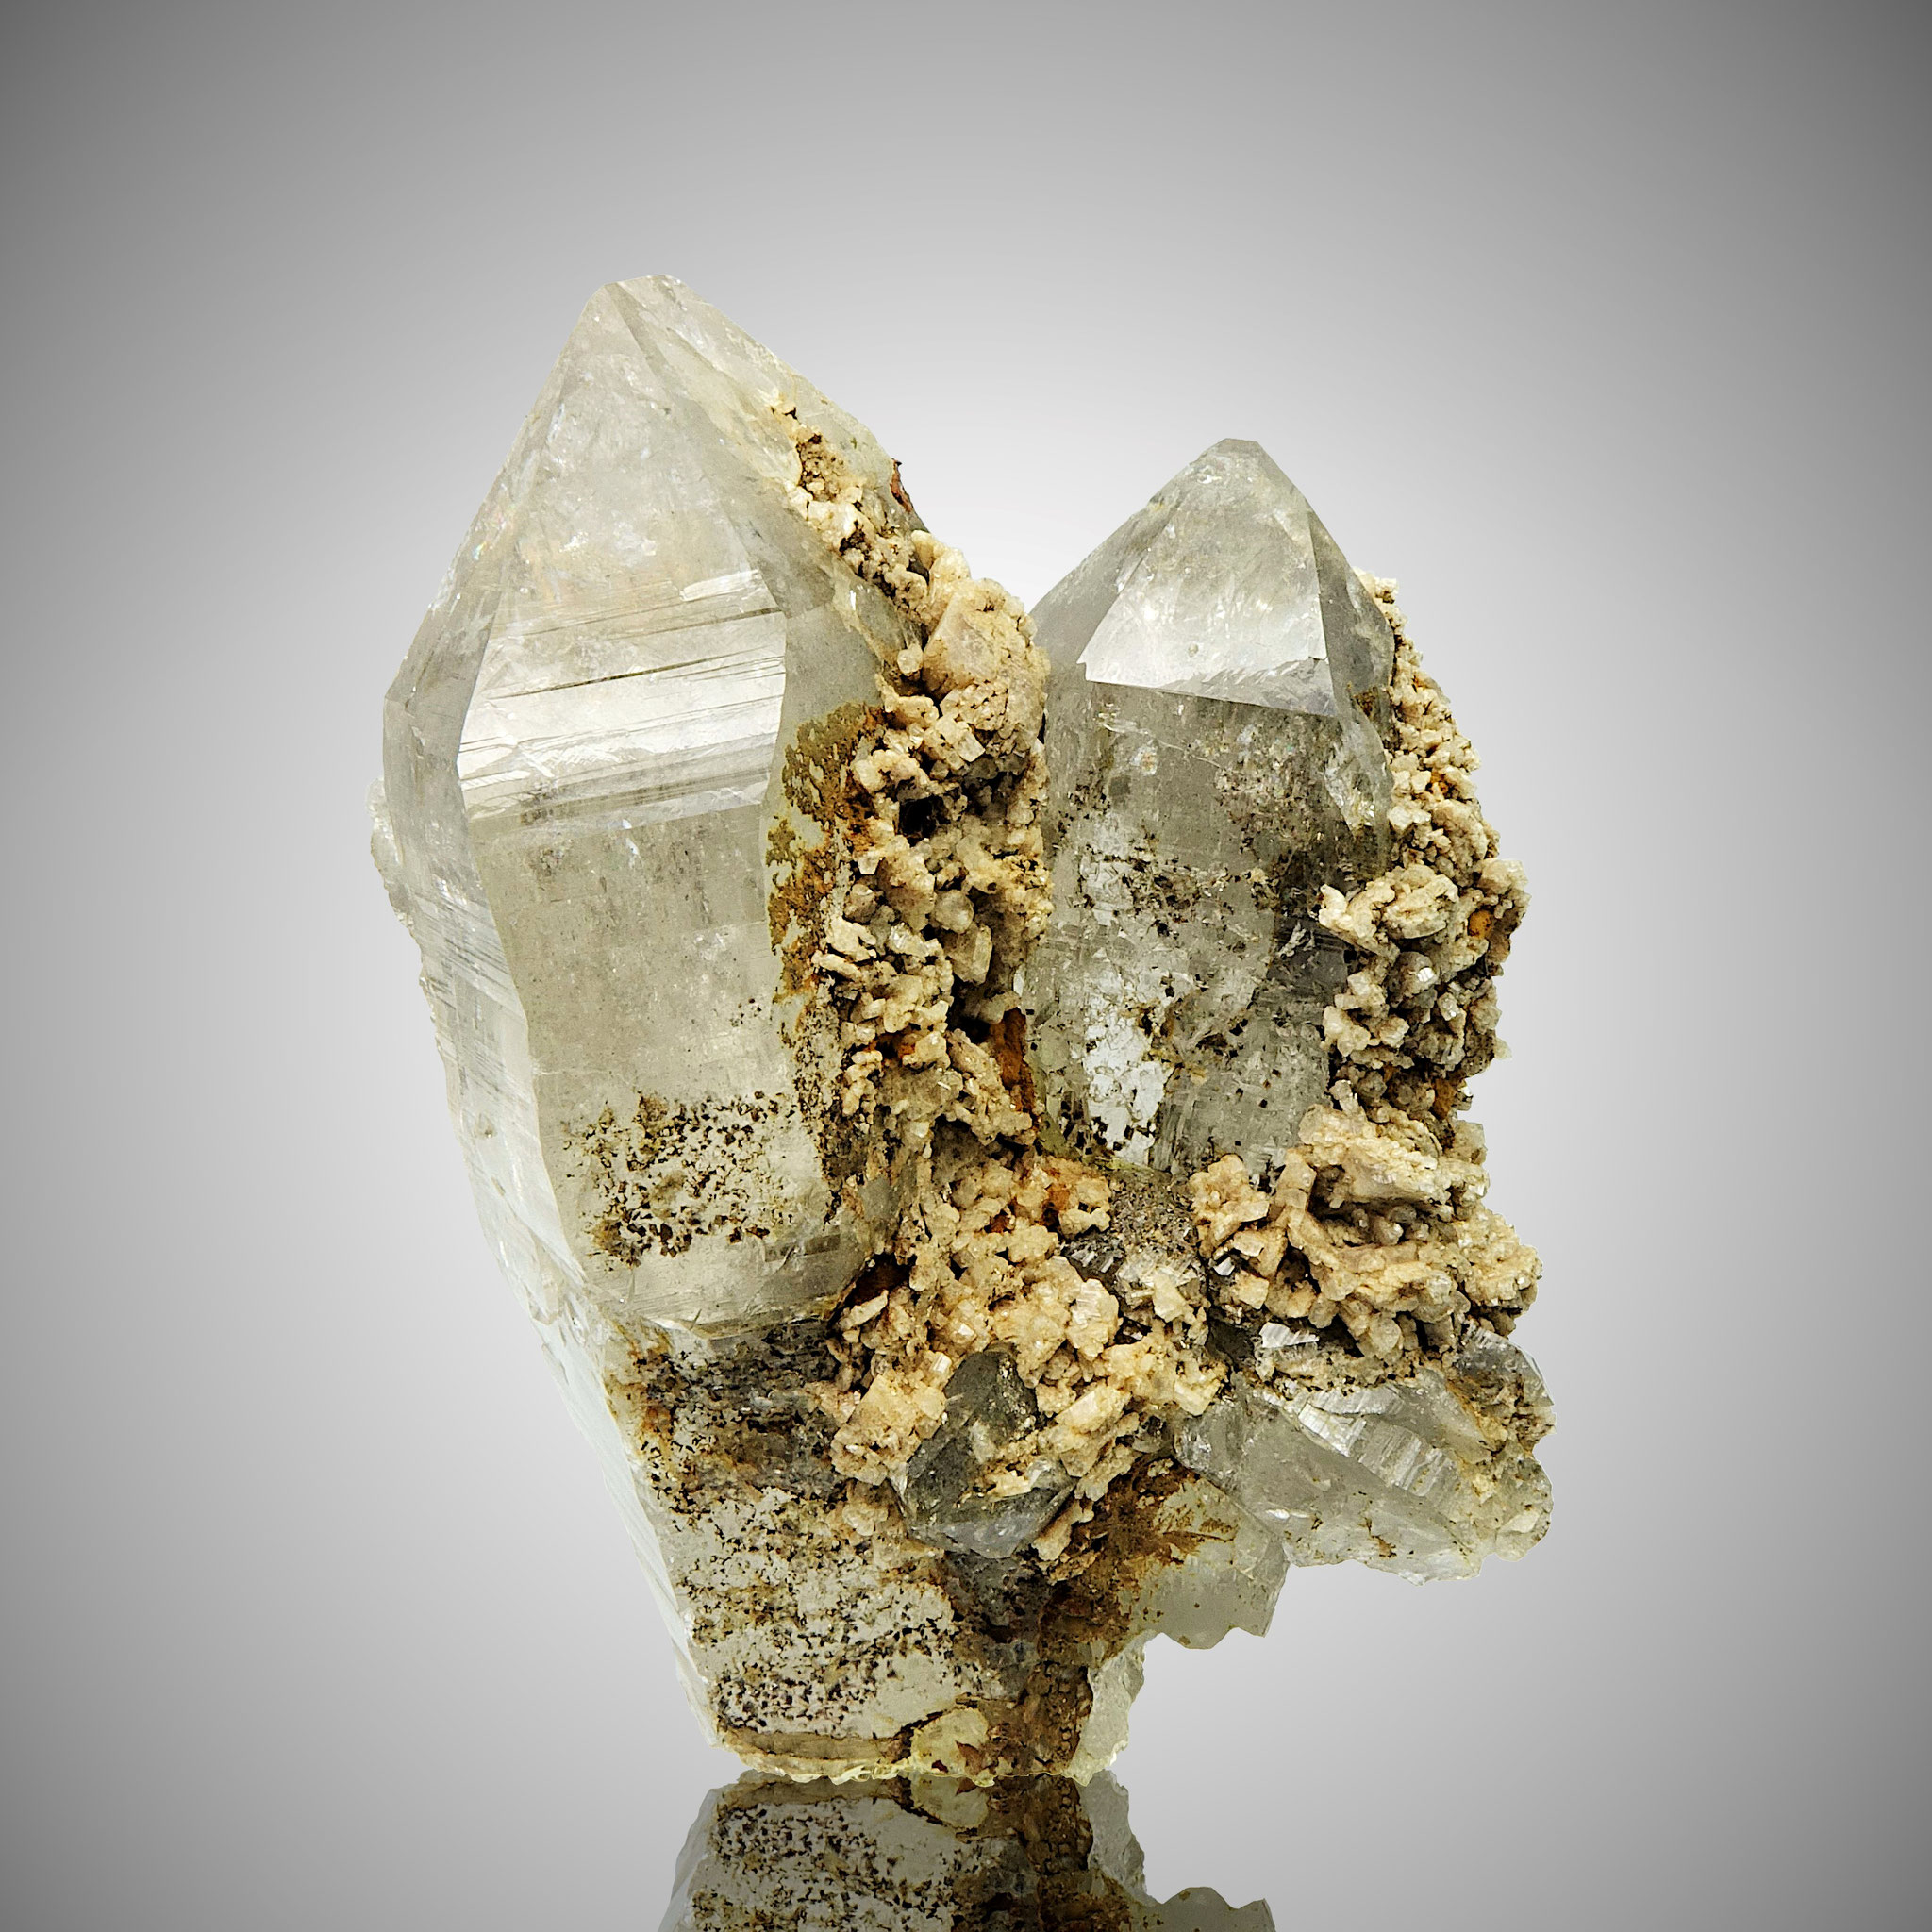 Bergkristall/Albit, "Ameliekluft" Lungau 2015, 11,5 x 9 x 6,5 cm